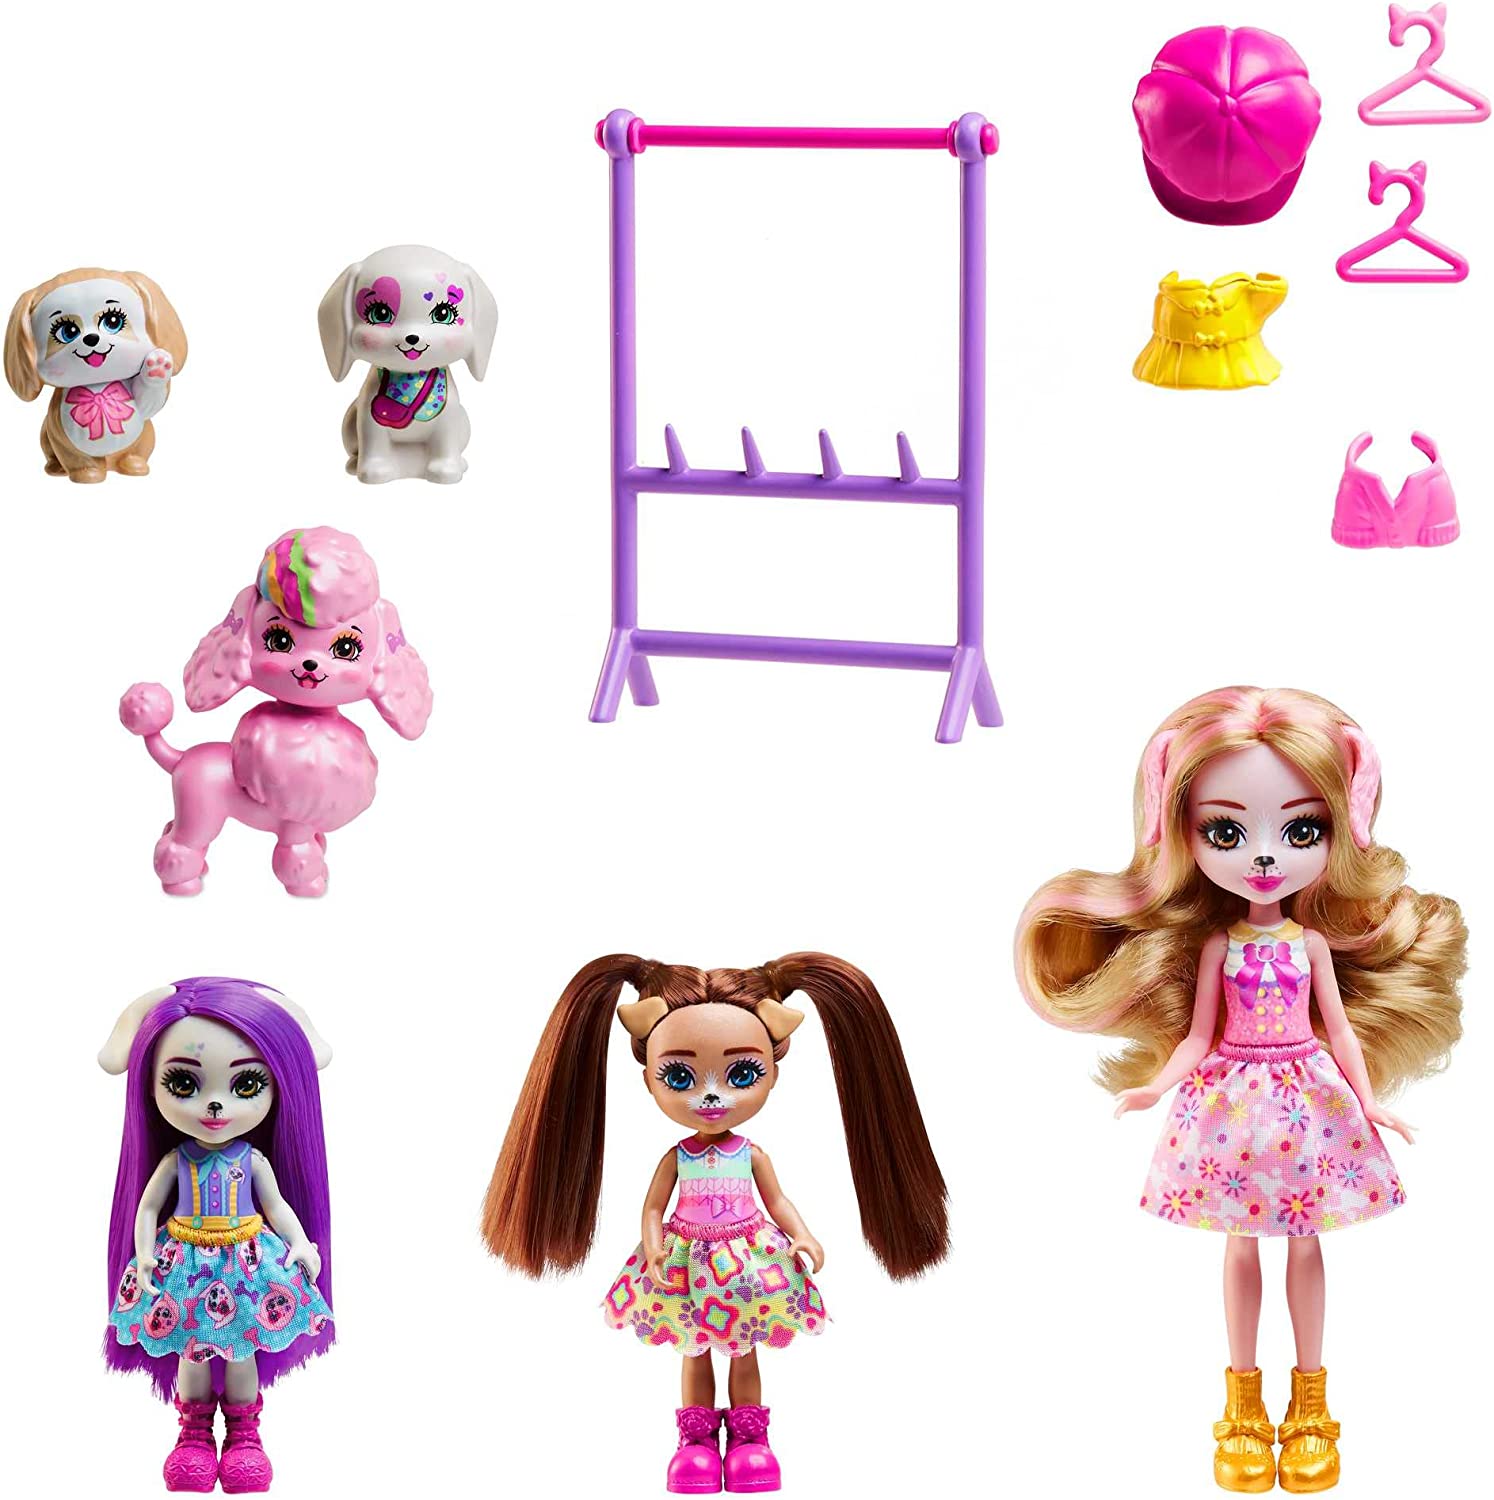 Enchantimals Dolls Lot of 15 With Pet Animals